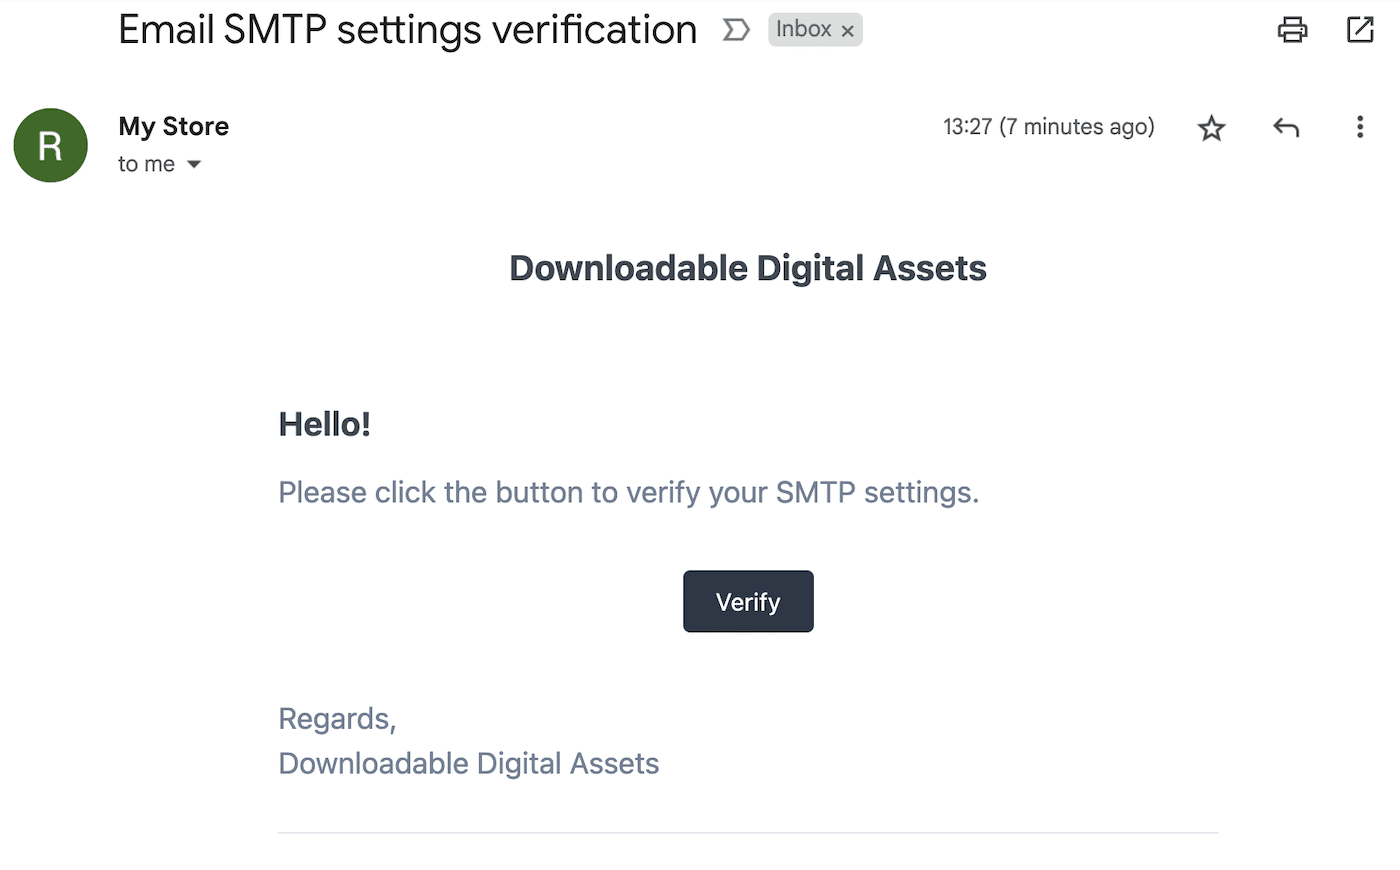 DDA SMTP email verification